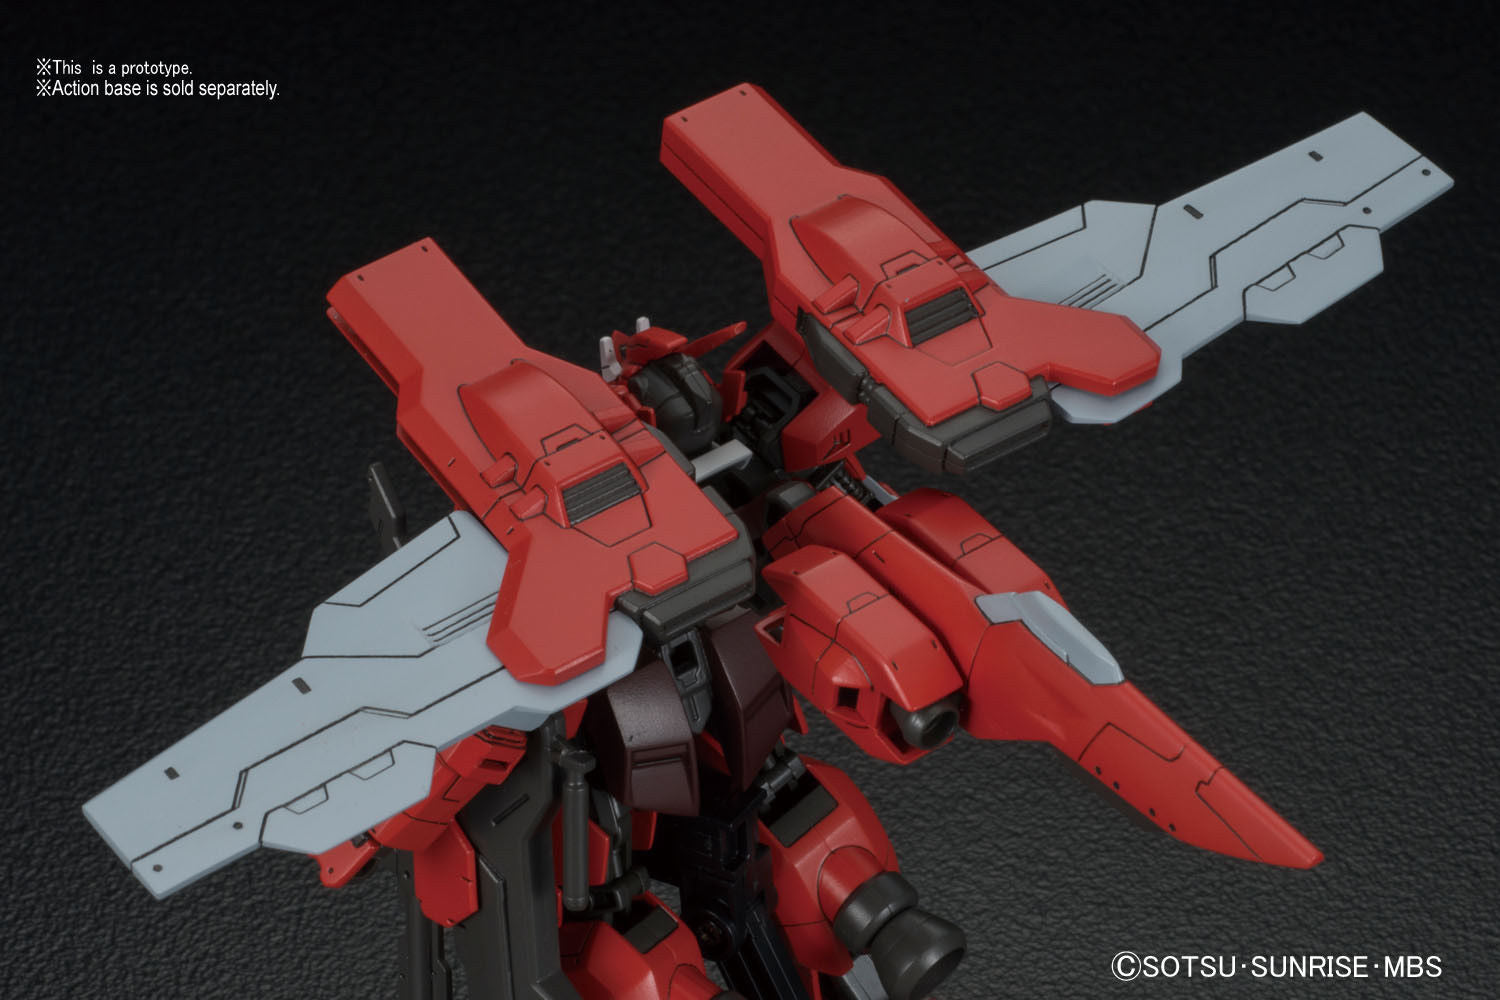 HGIBO - ASW-G-29 Gundam Astaroth Origin